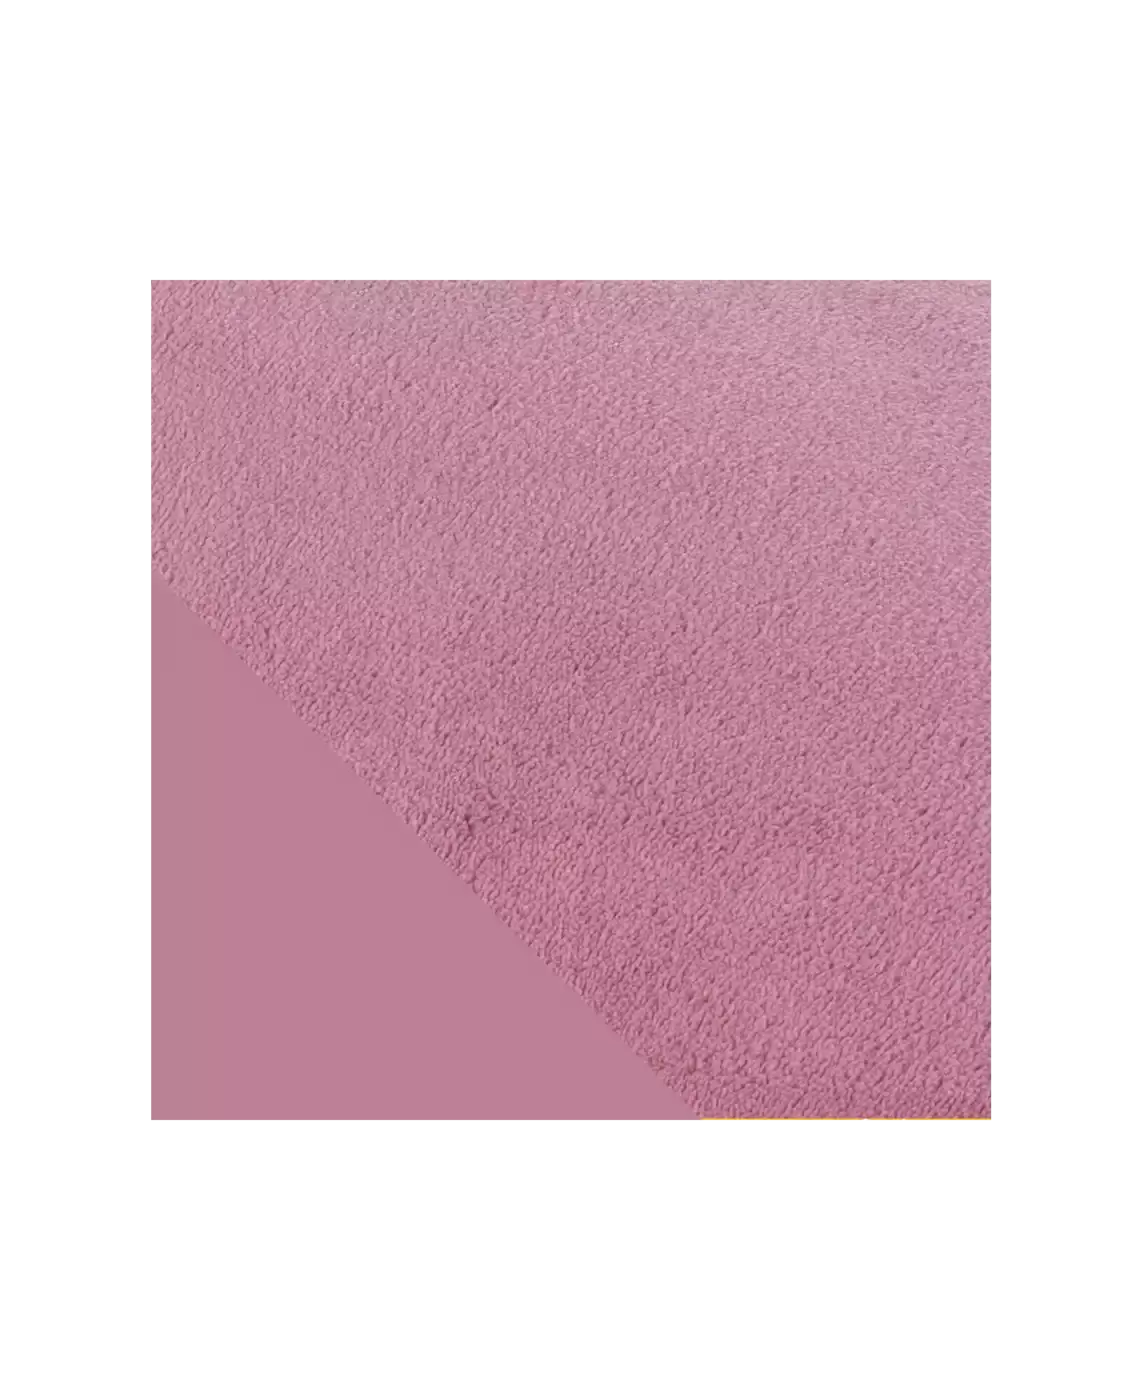 Plüschmond Malve THERALINE Pink Rosa 2000559962604 4